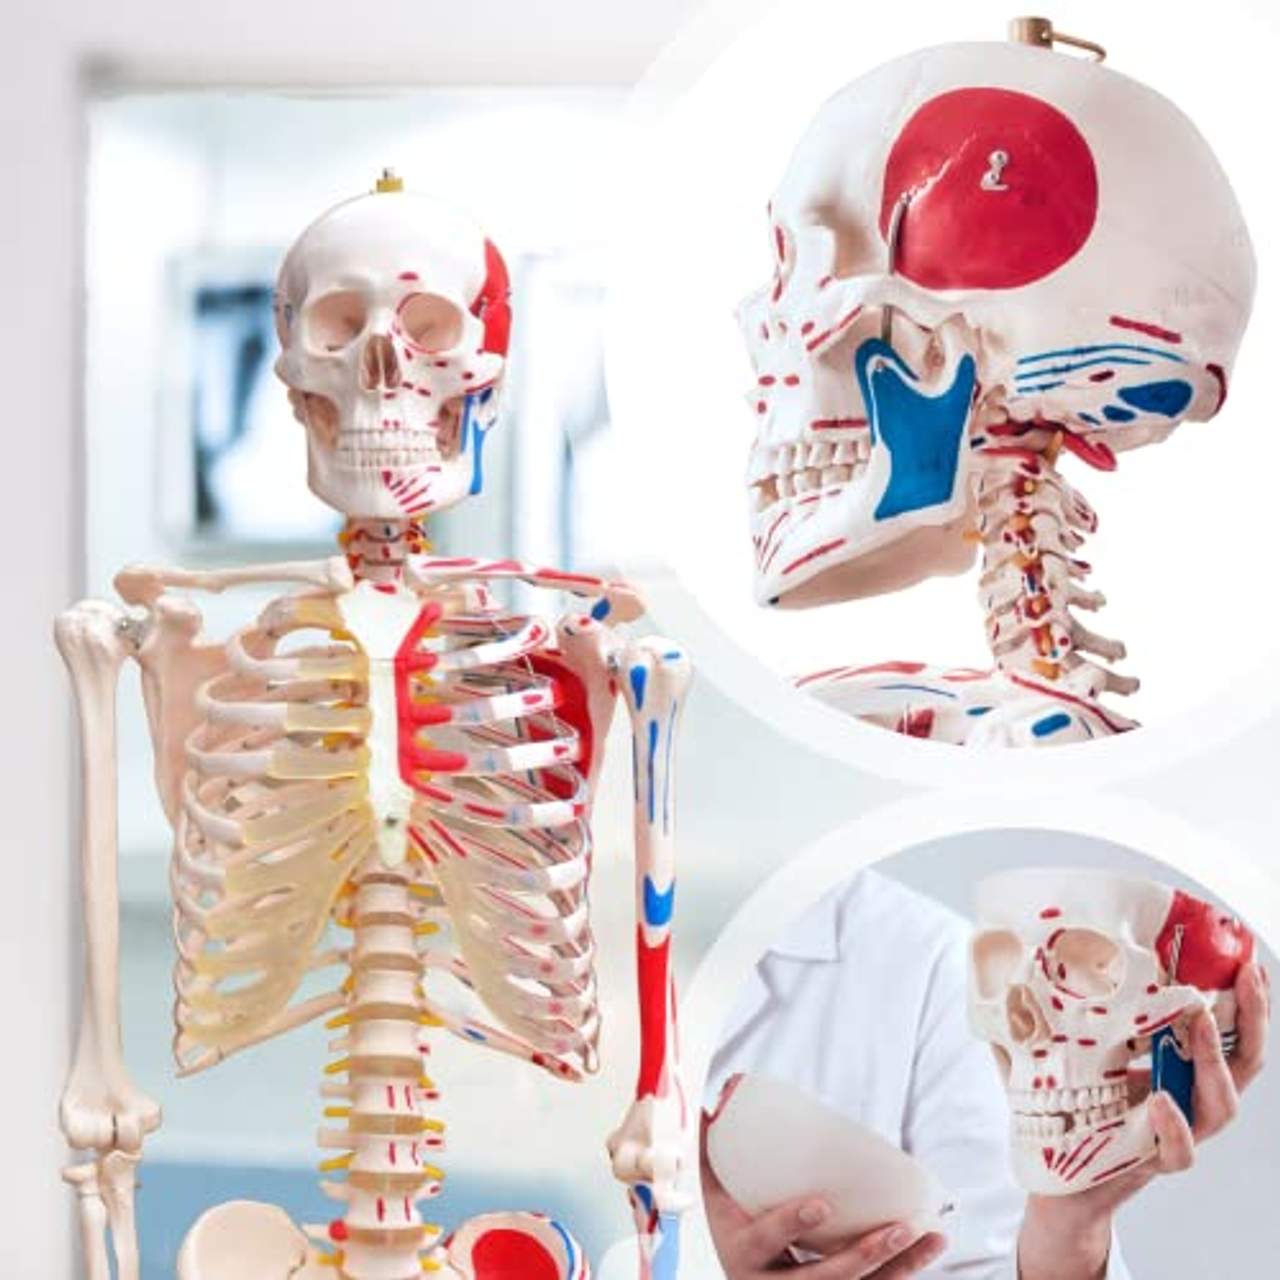 VENDOMNIA Anatomie Skelett